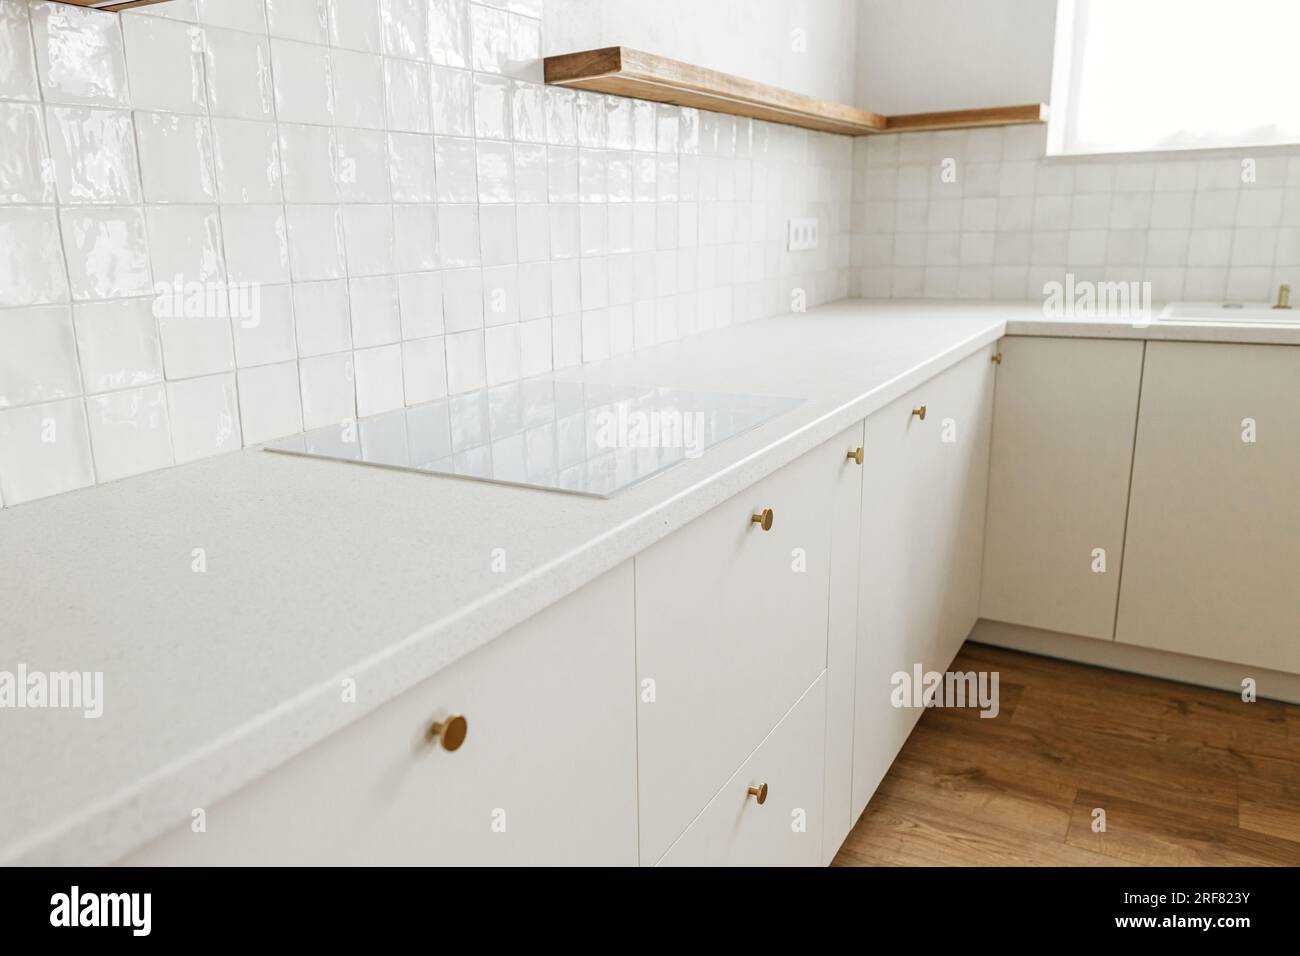 Modern stylish Scandinavian kitchen interior with kitchen accessories.  Bright white kitchen with household items Stock Photo - Alamy